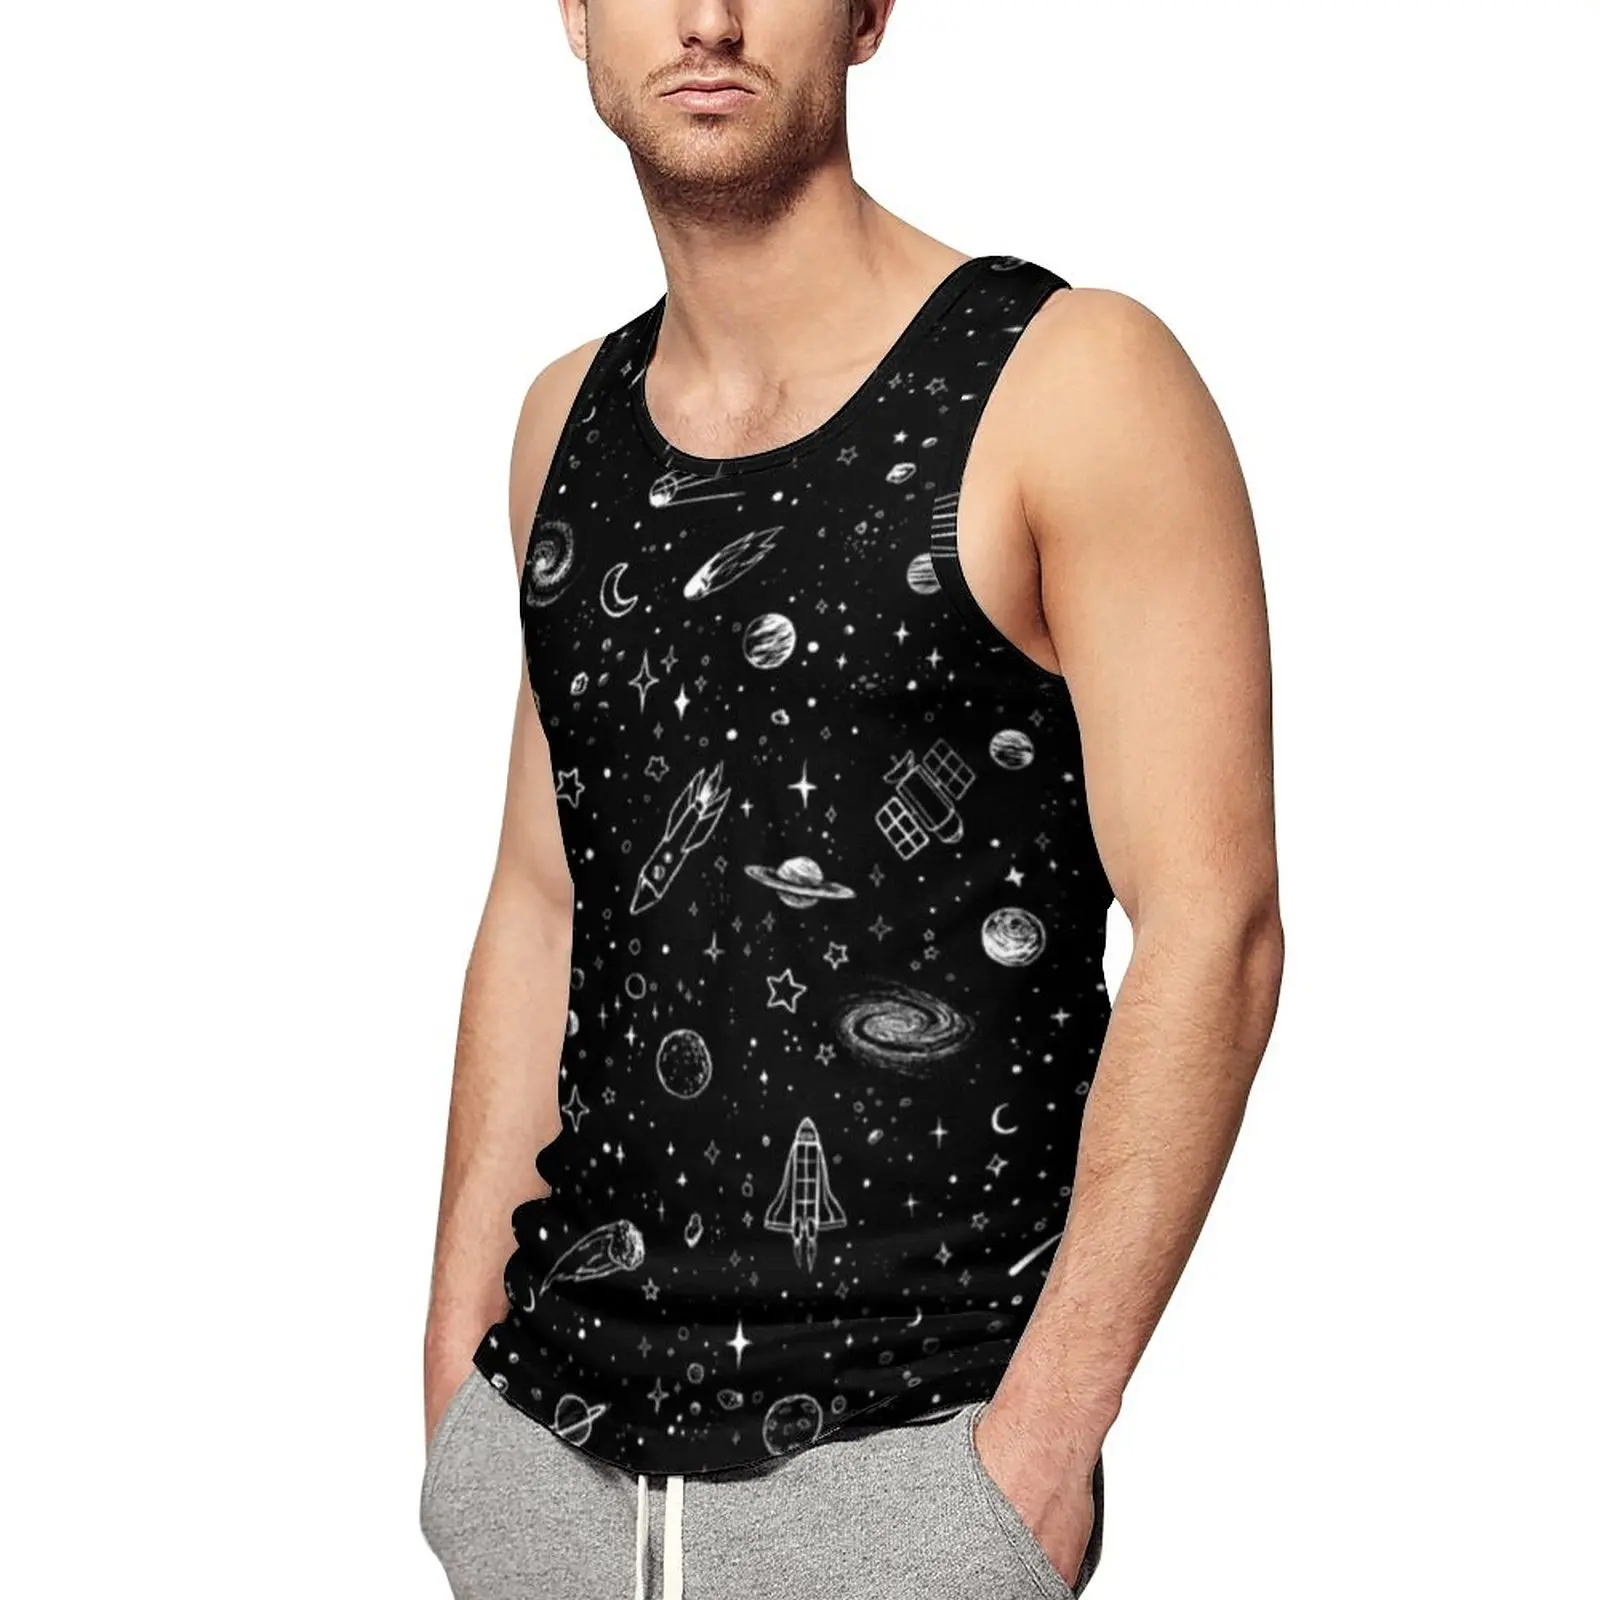 

Moon Star Tank Top Mens Space Galaxy Universe Muscle Tops Summer Training Design Sleeveless Shirts 3XL 4XL 5XL